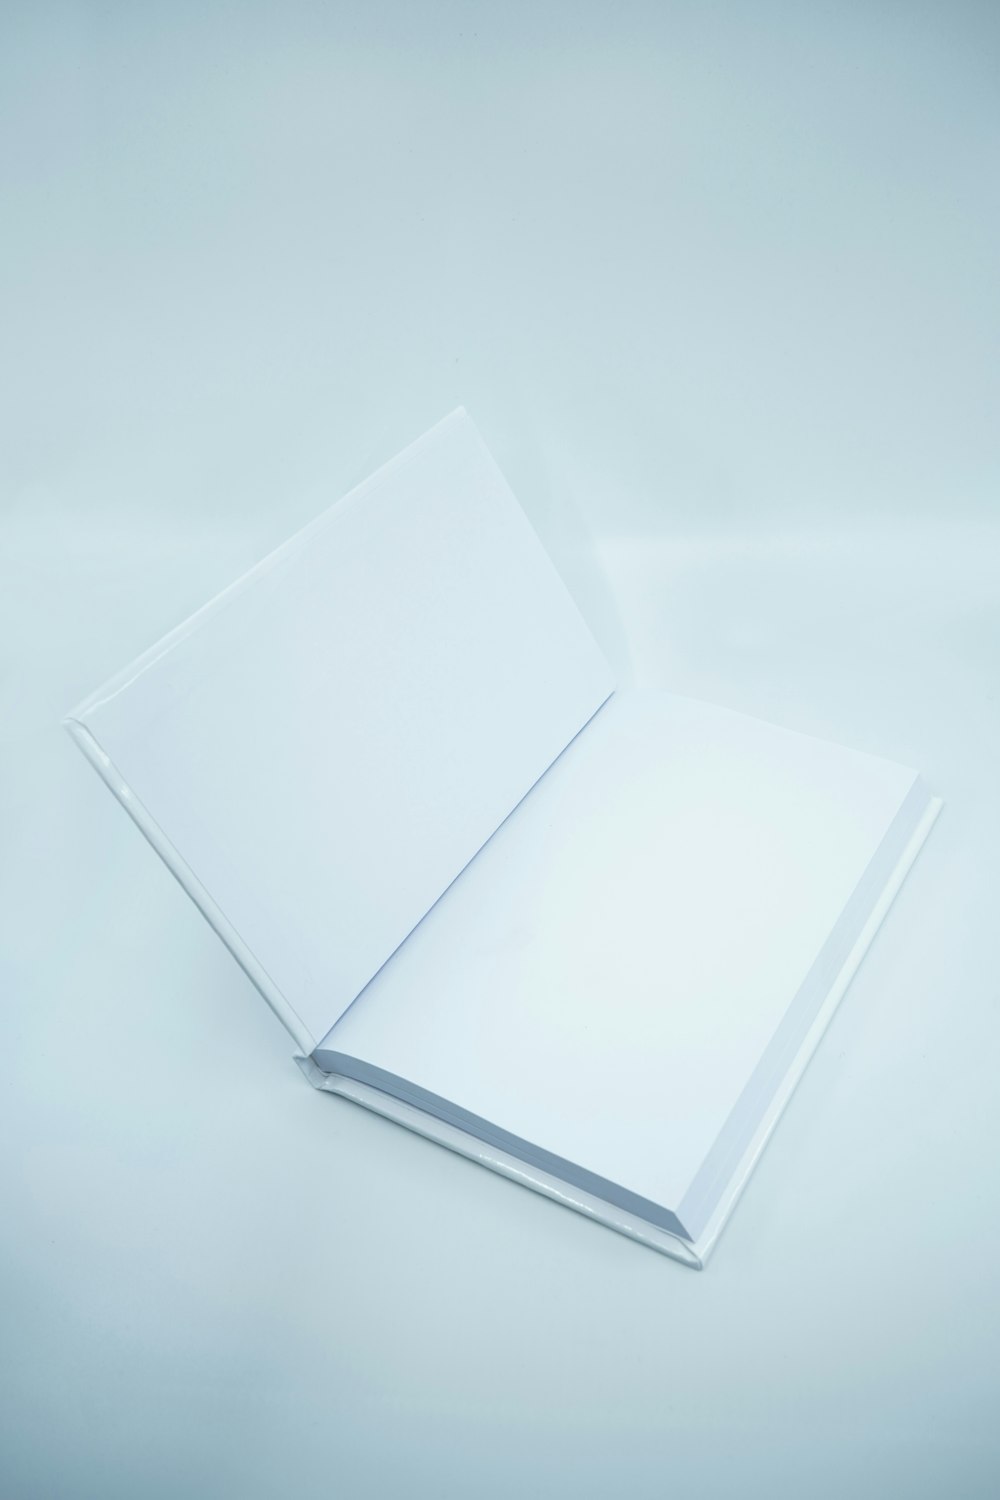 papel de impressora branco na superfície branca